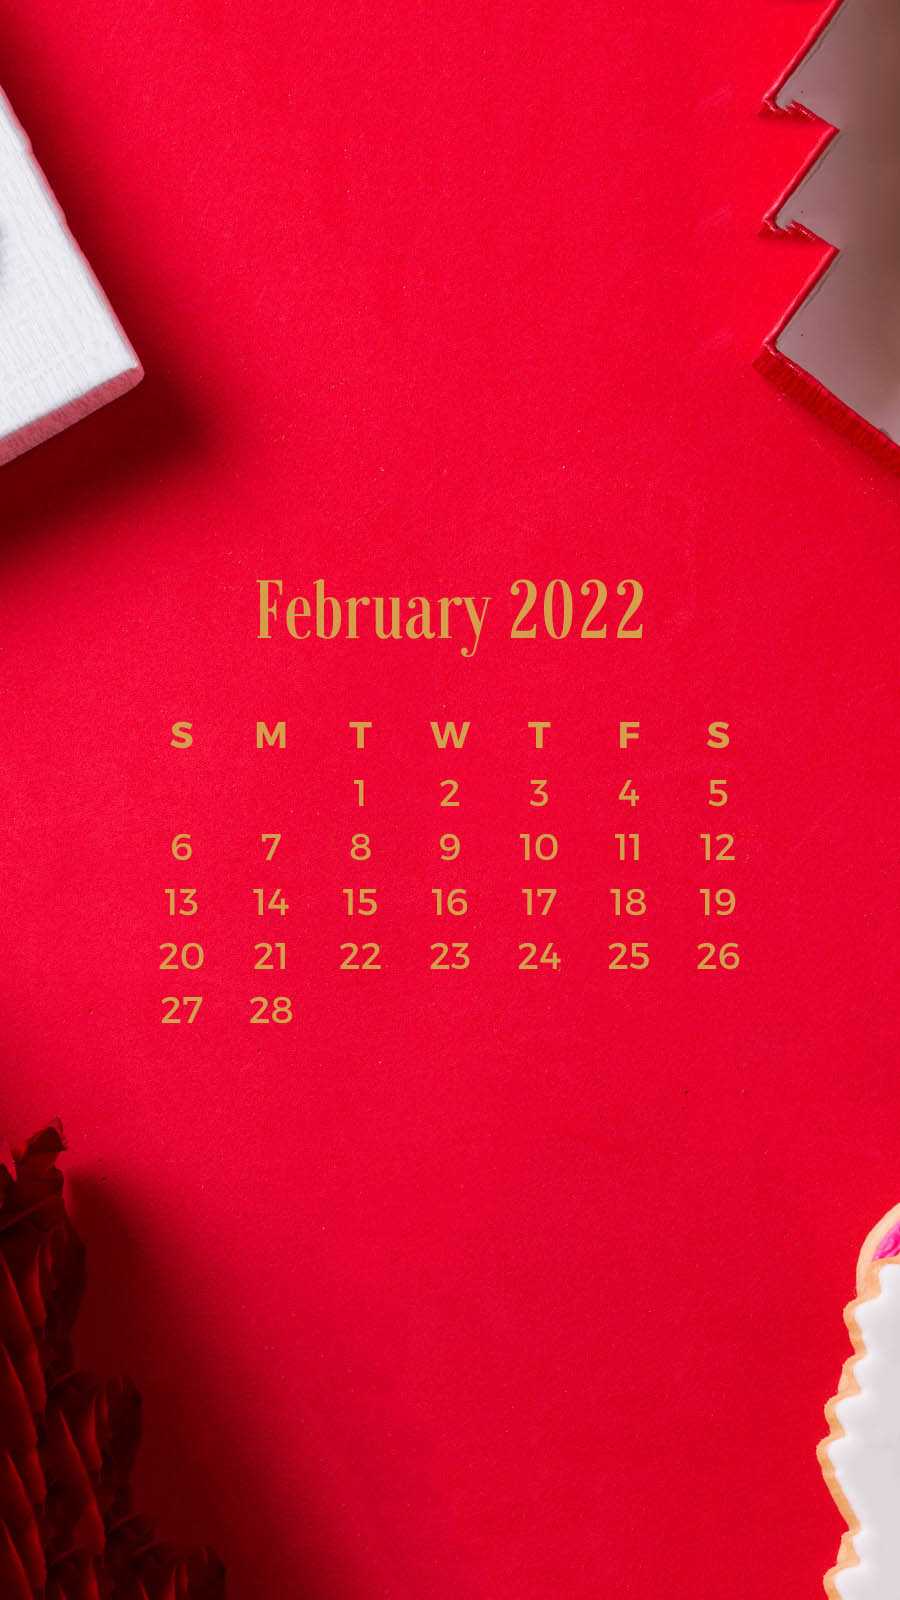 February 2022 Calendar Wallpaper 1